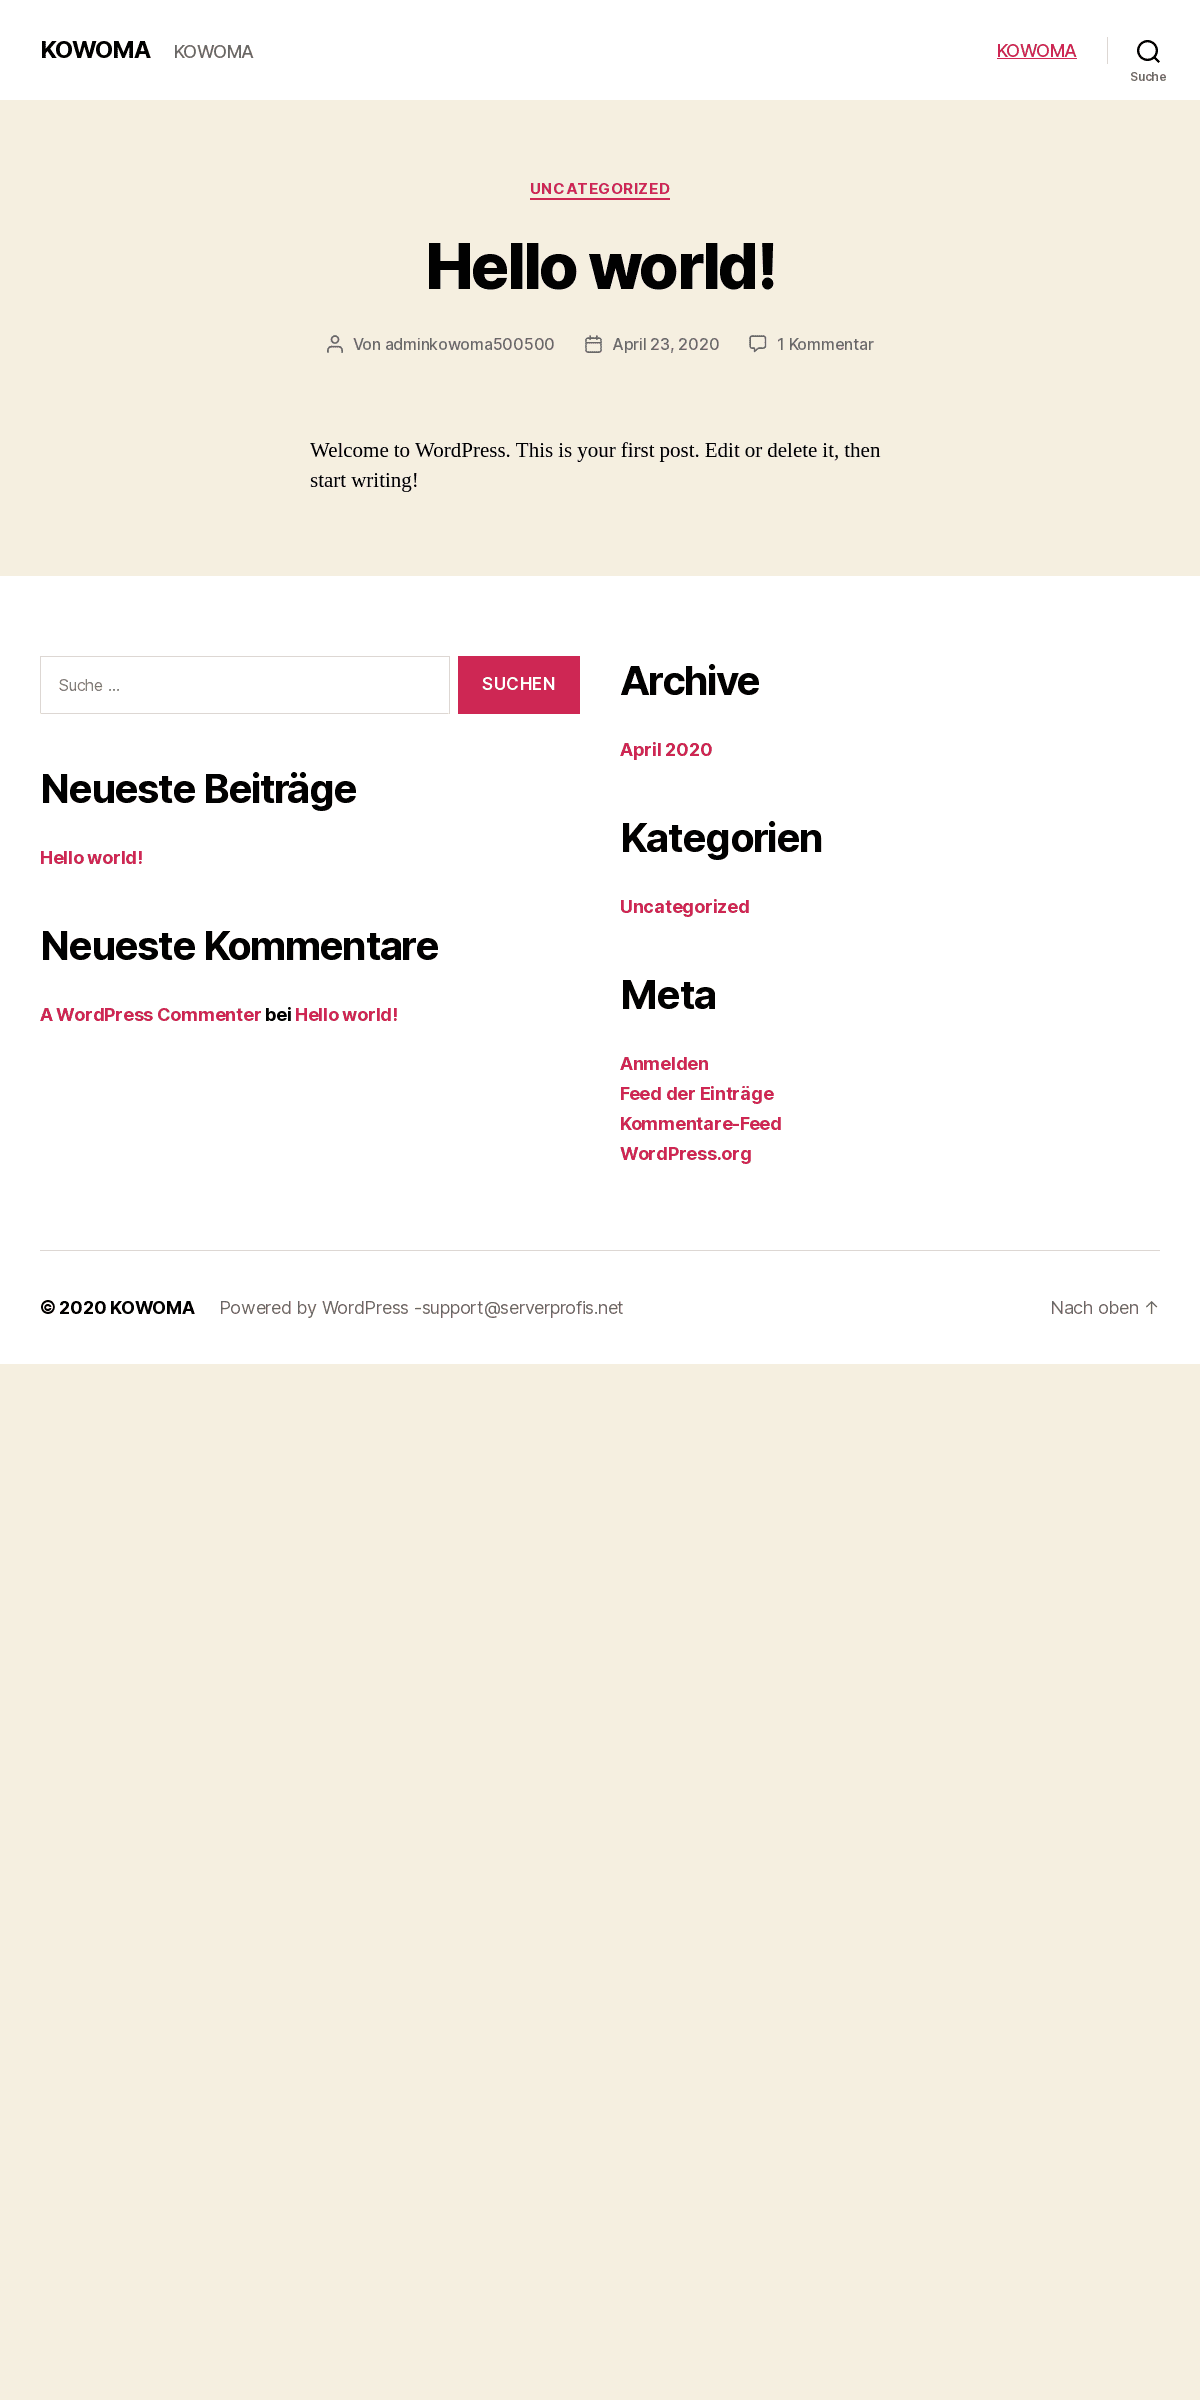 A complete backup of kowoma.de